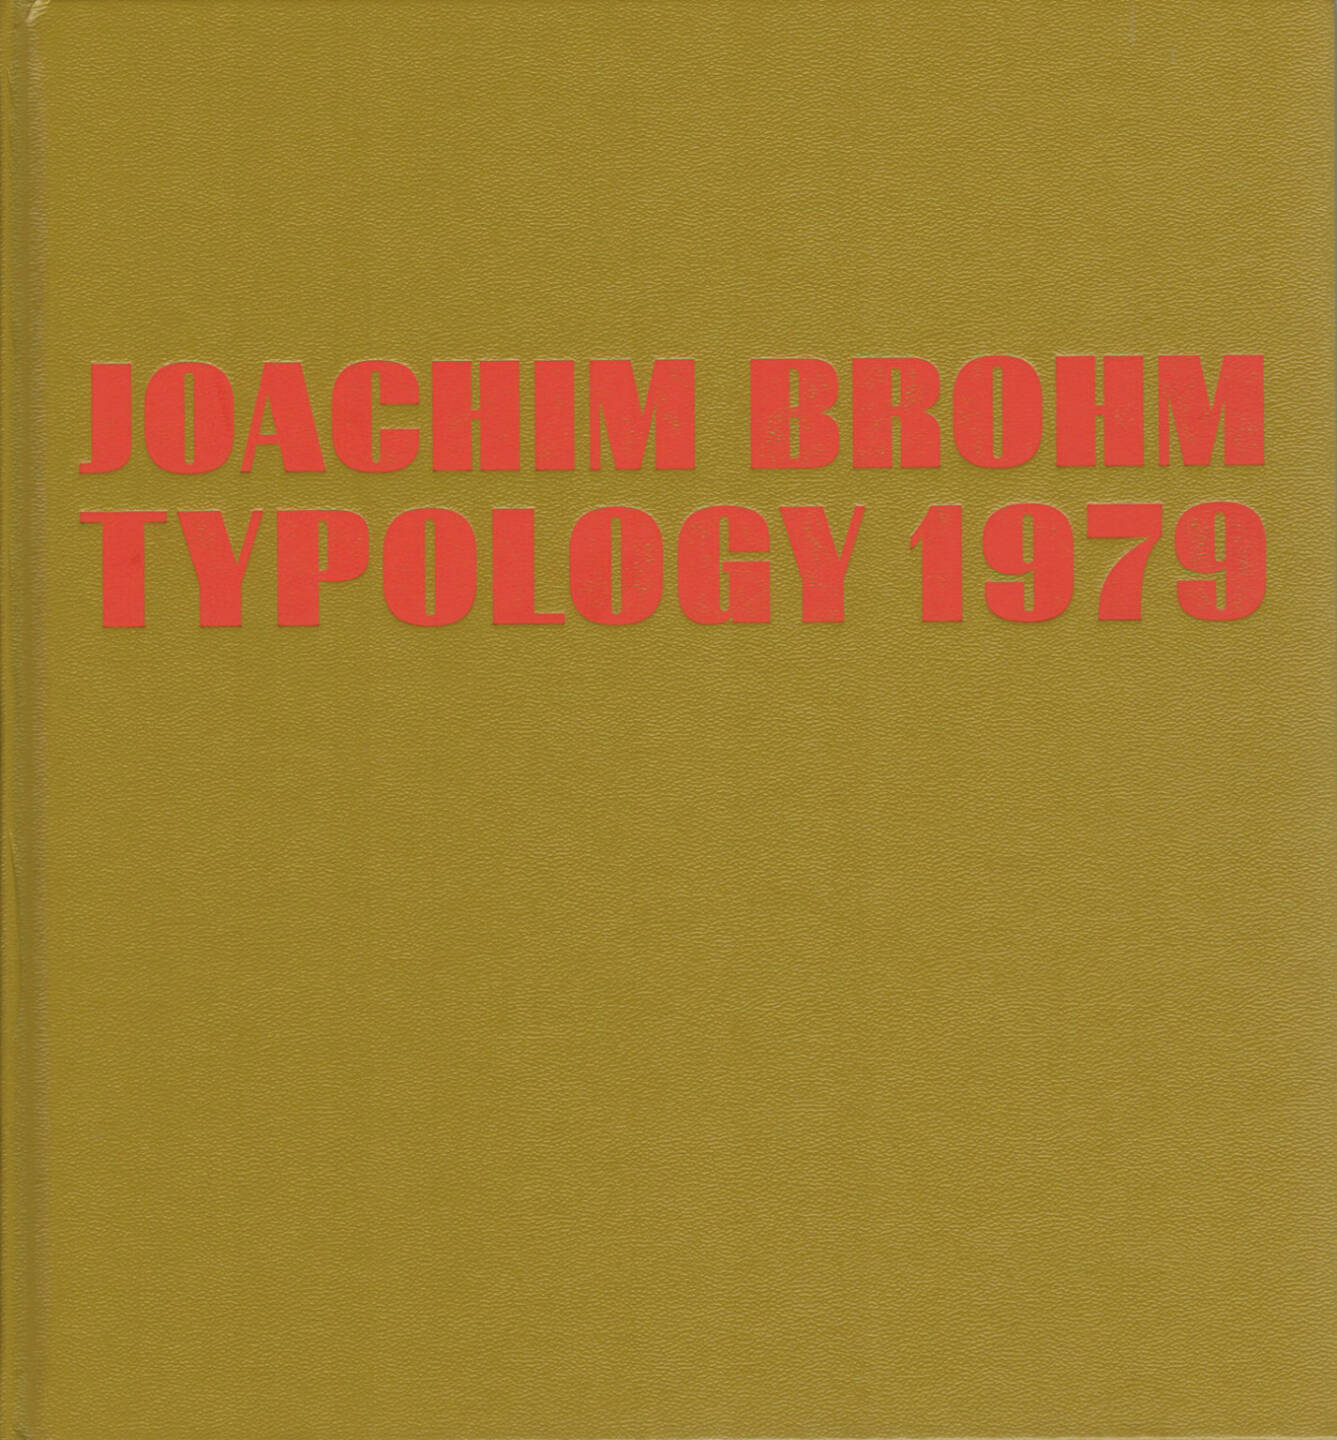 Joachim Brohm - Typology 1979, MACK, 2014, Cover - http://josefchladek.com/book/joachim_brohm_-_typology_1979